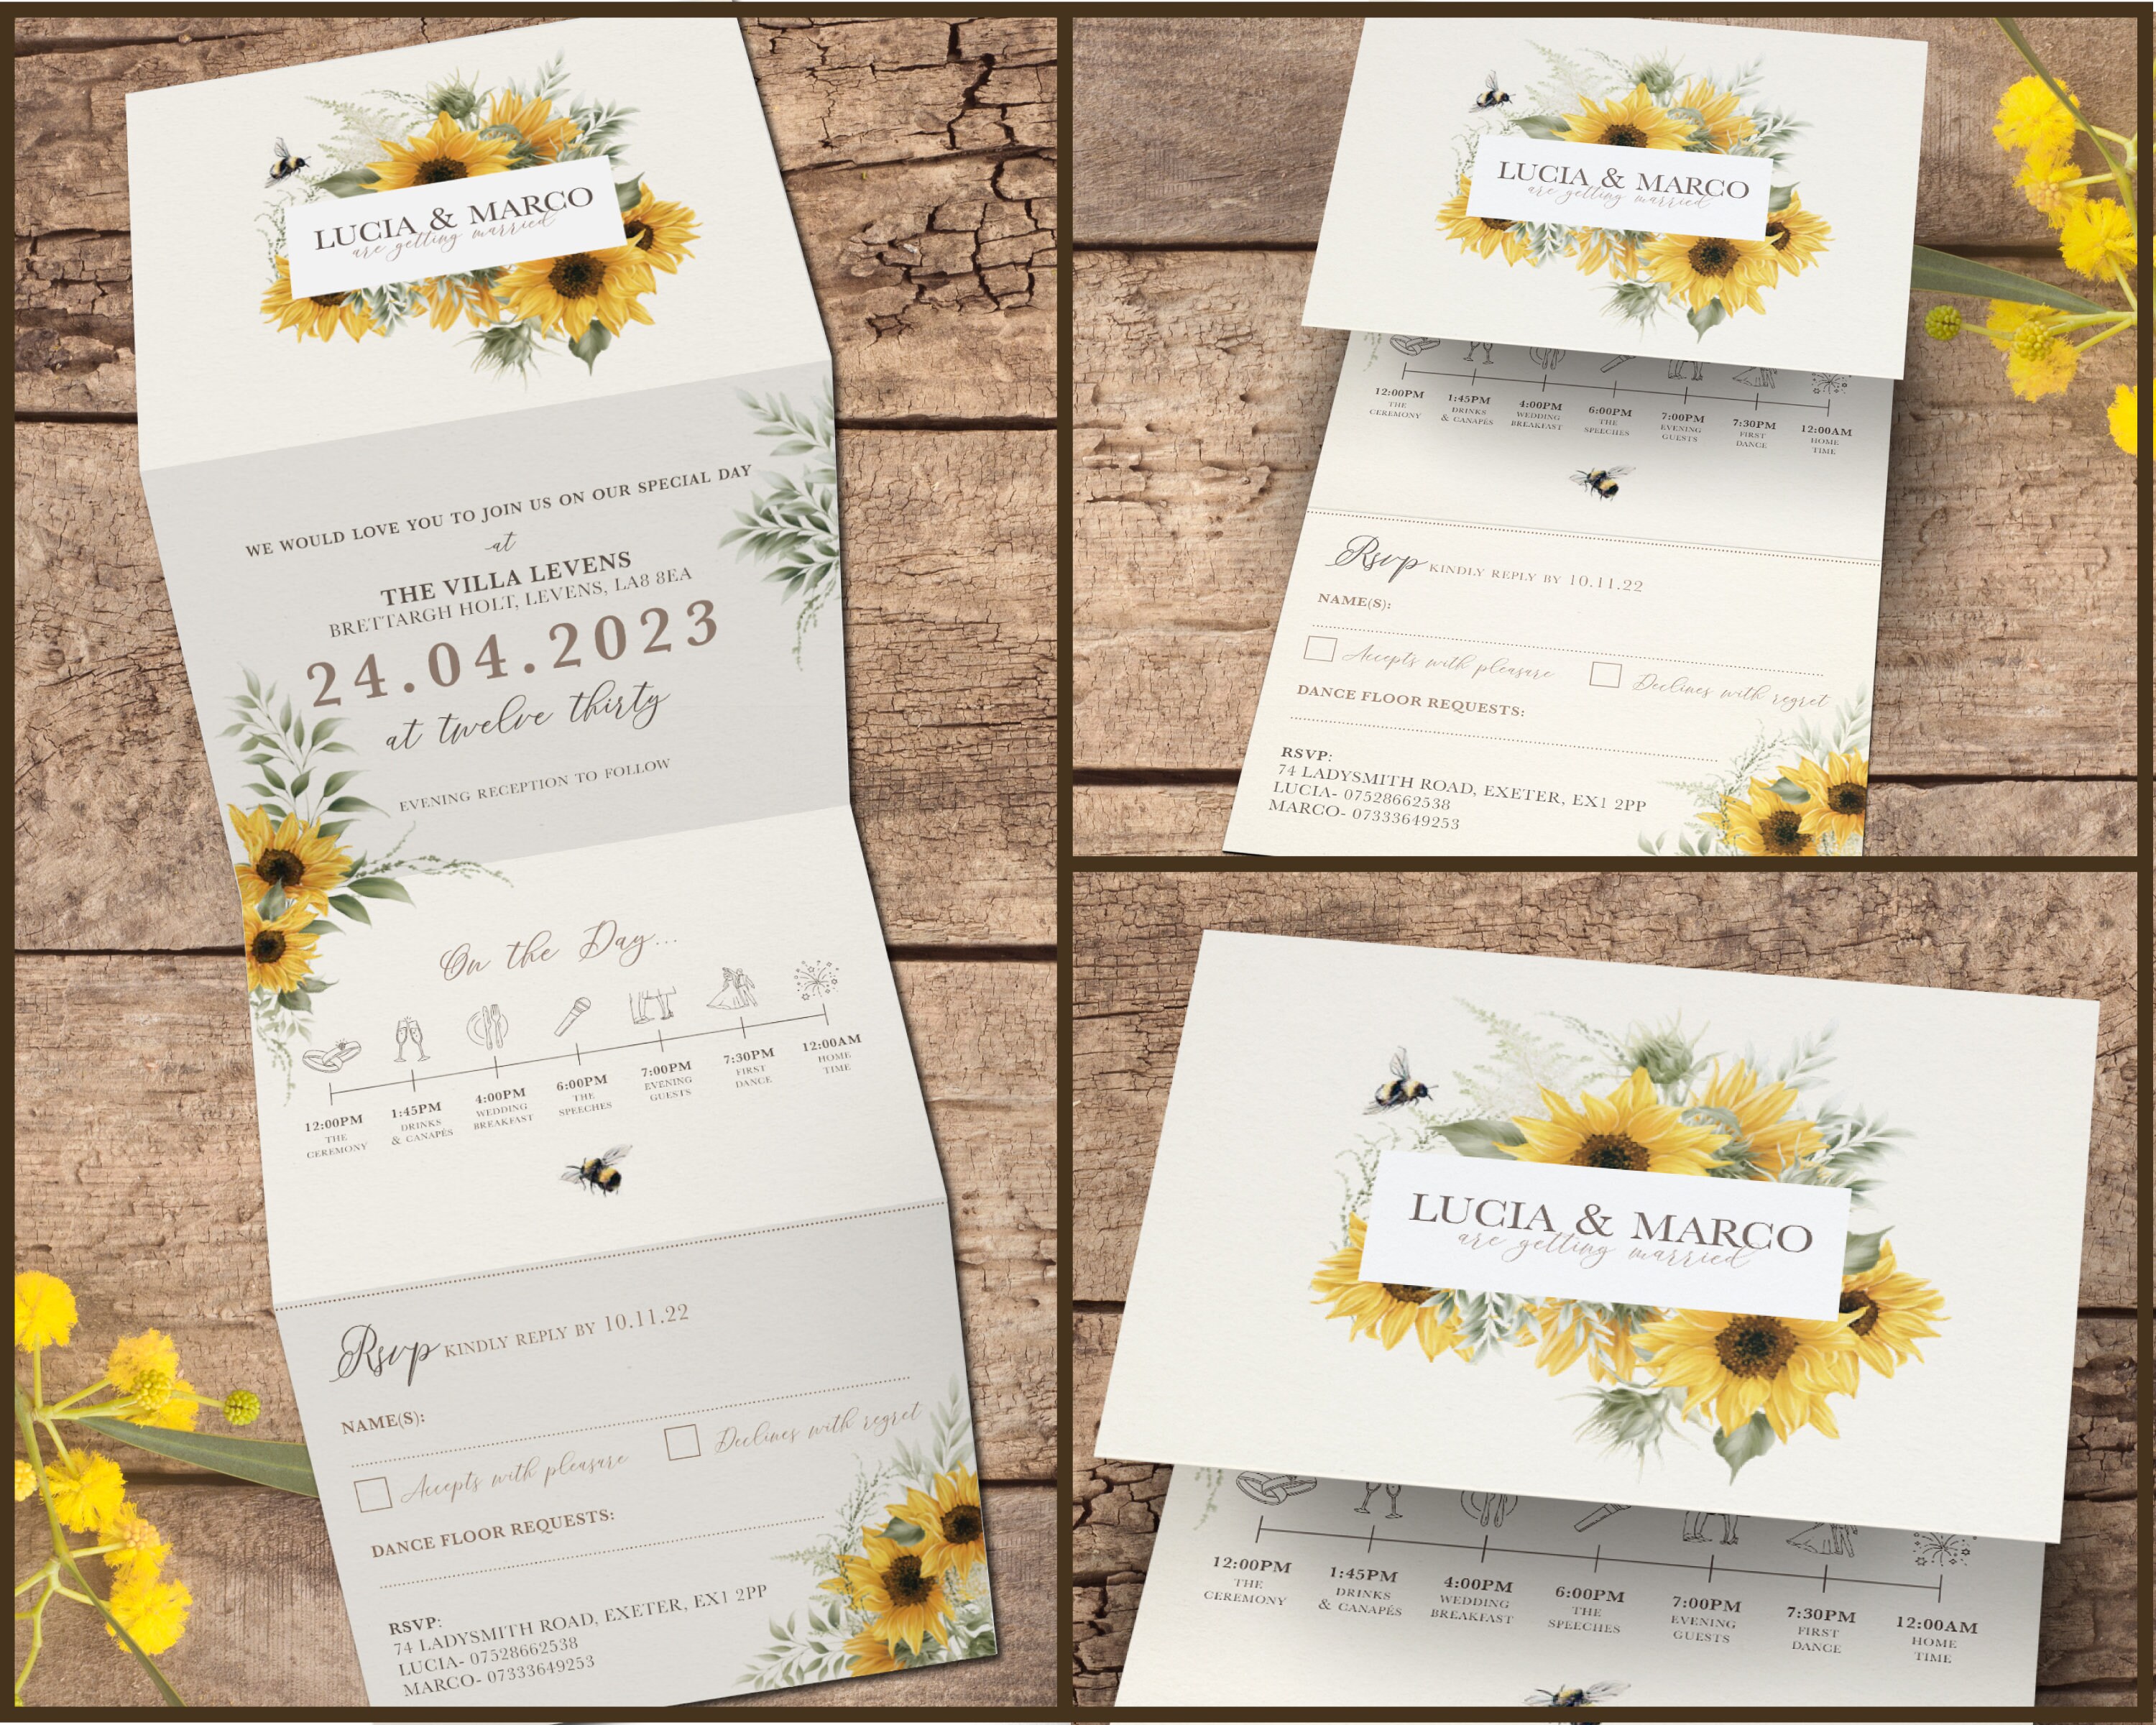 Rustic Sunflower Acrylic Wedding Invitations CA043